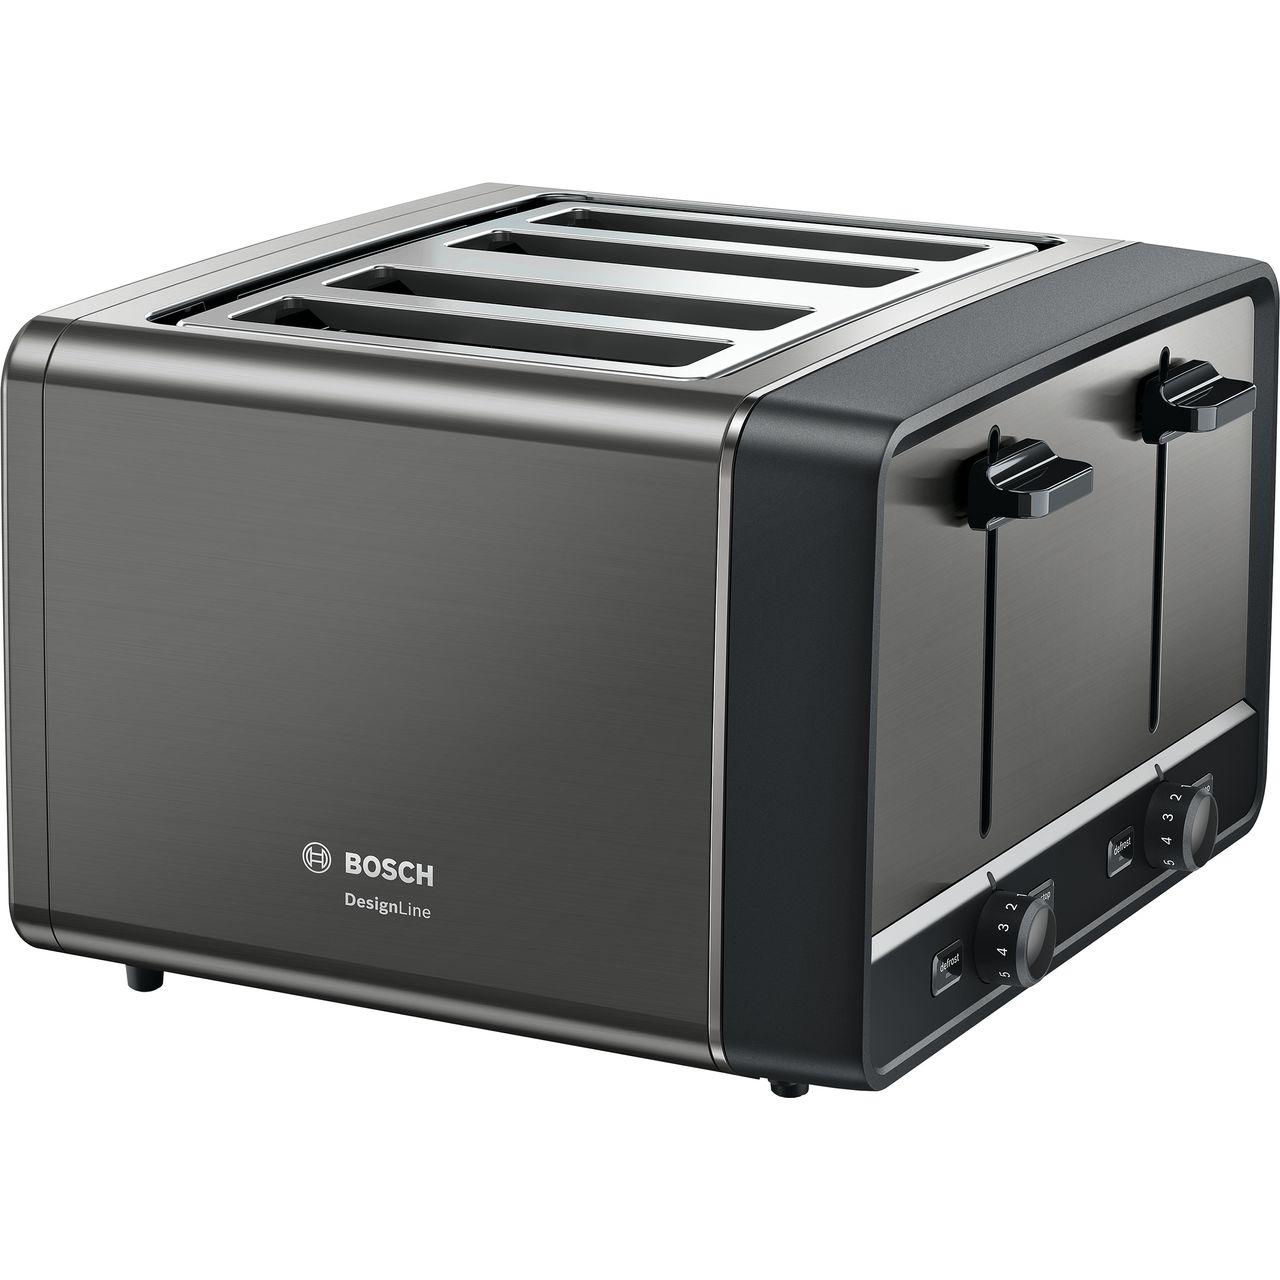 Bosch DesignLine TAT5P445GB 4 Slice Toaster Review